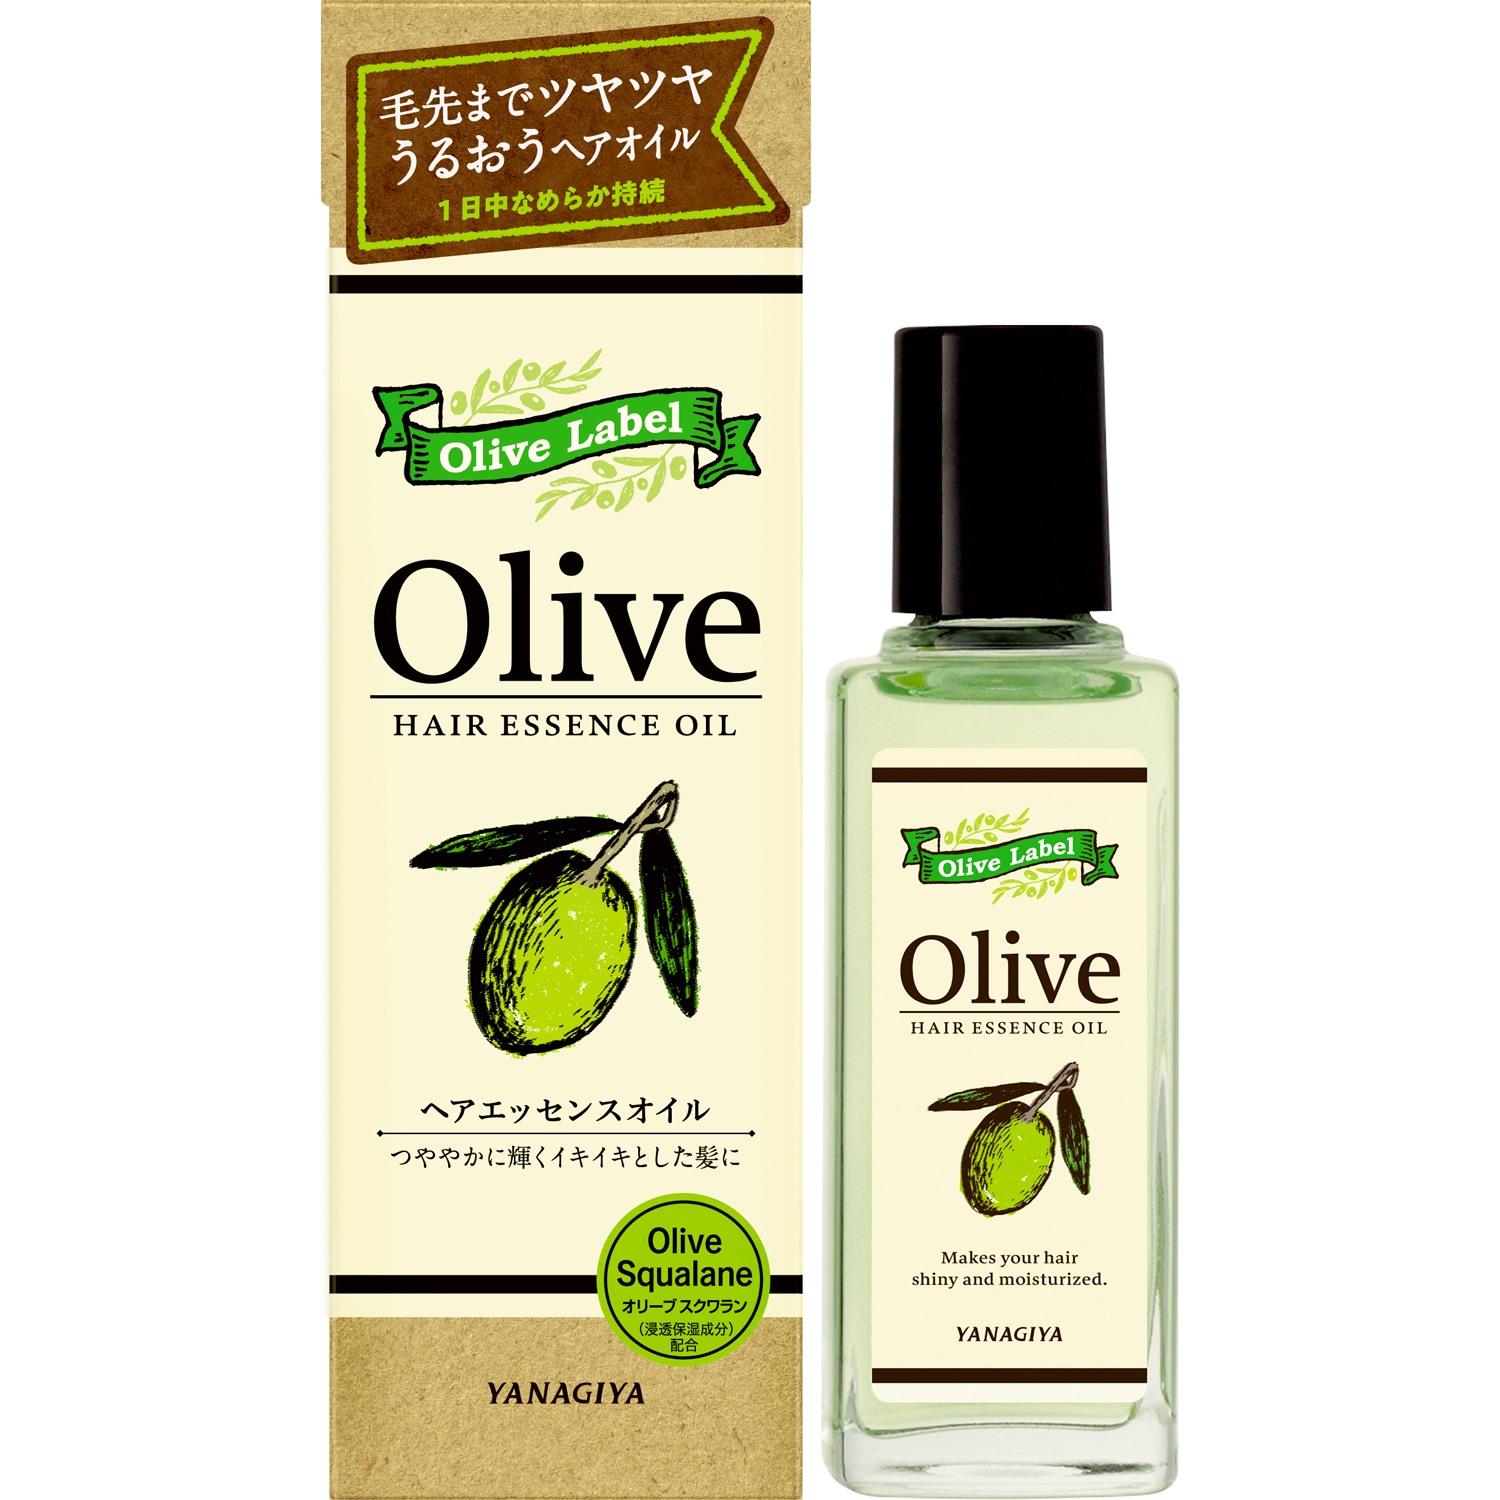 Olive Label Hair Essence Oil